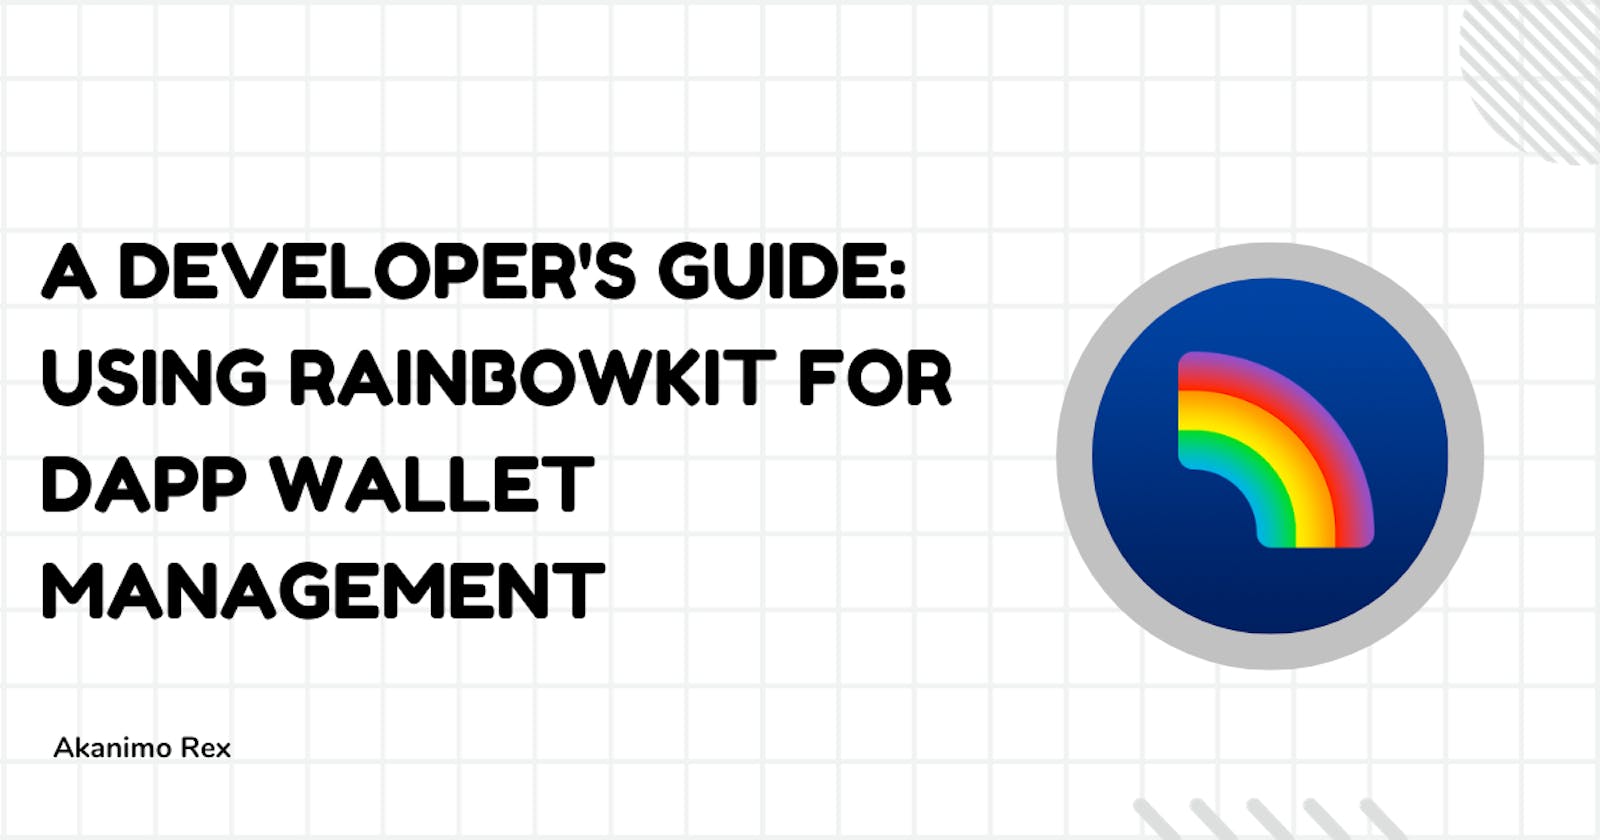 A Developer's Guide: Using RainbowKit for DApp Wallet Management